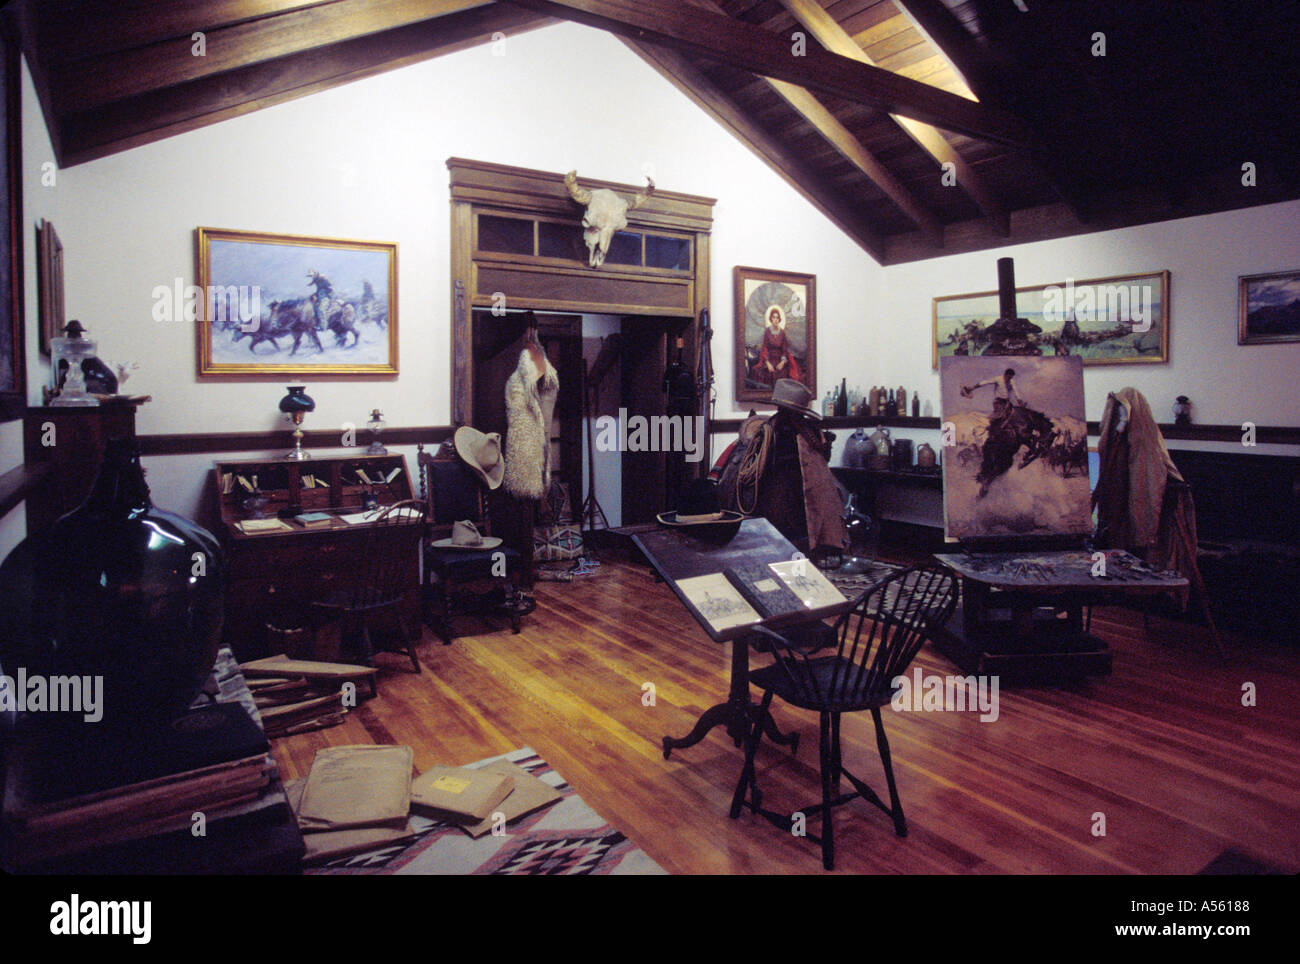 Wyoming Cody Buffalo Bill Historical Center Whitney Gallery of Western Art réplique de W H D Keorner studio Banque D'Images